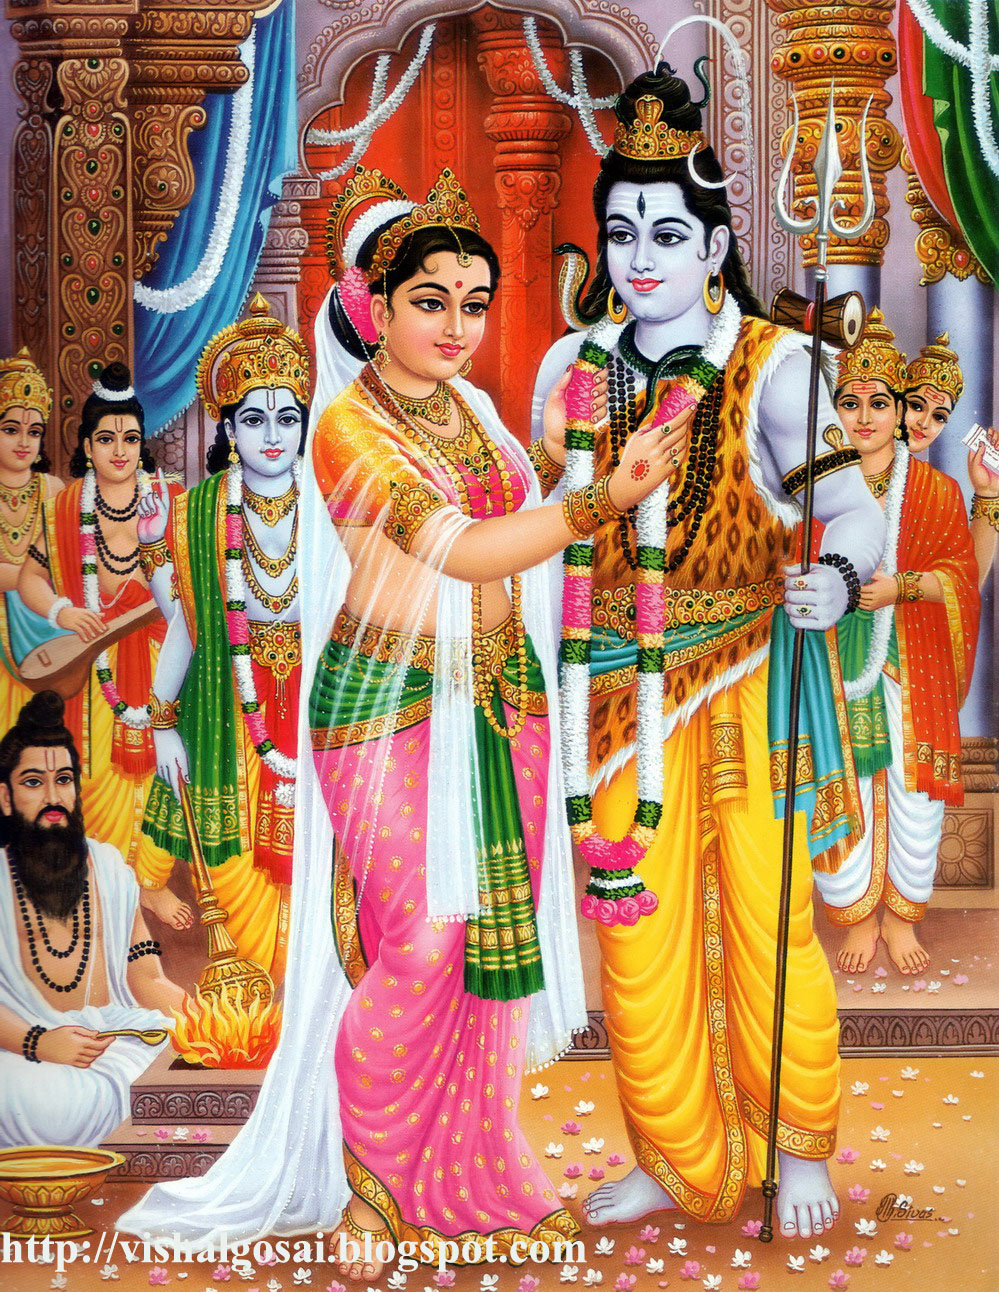 VISHAL GOSAI: Lord Shiv & Maa Parvati Durga